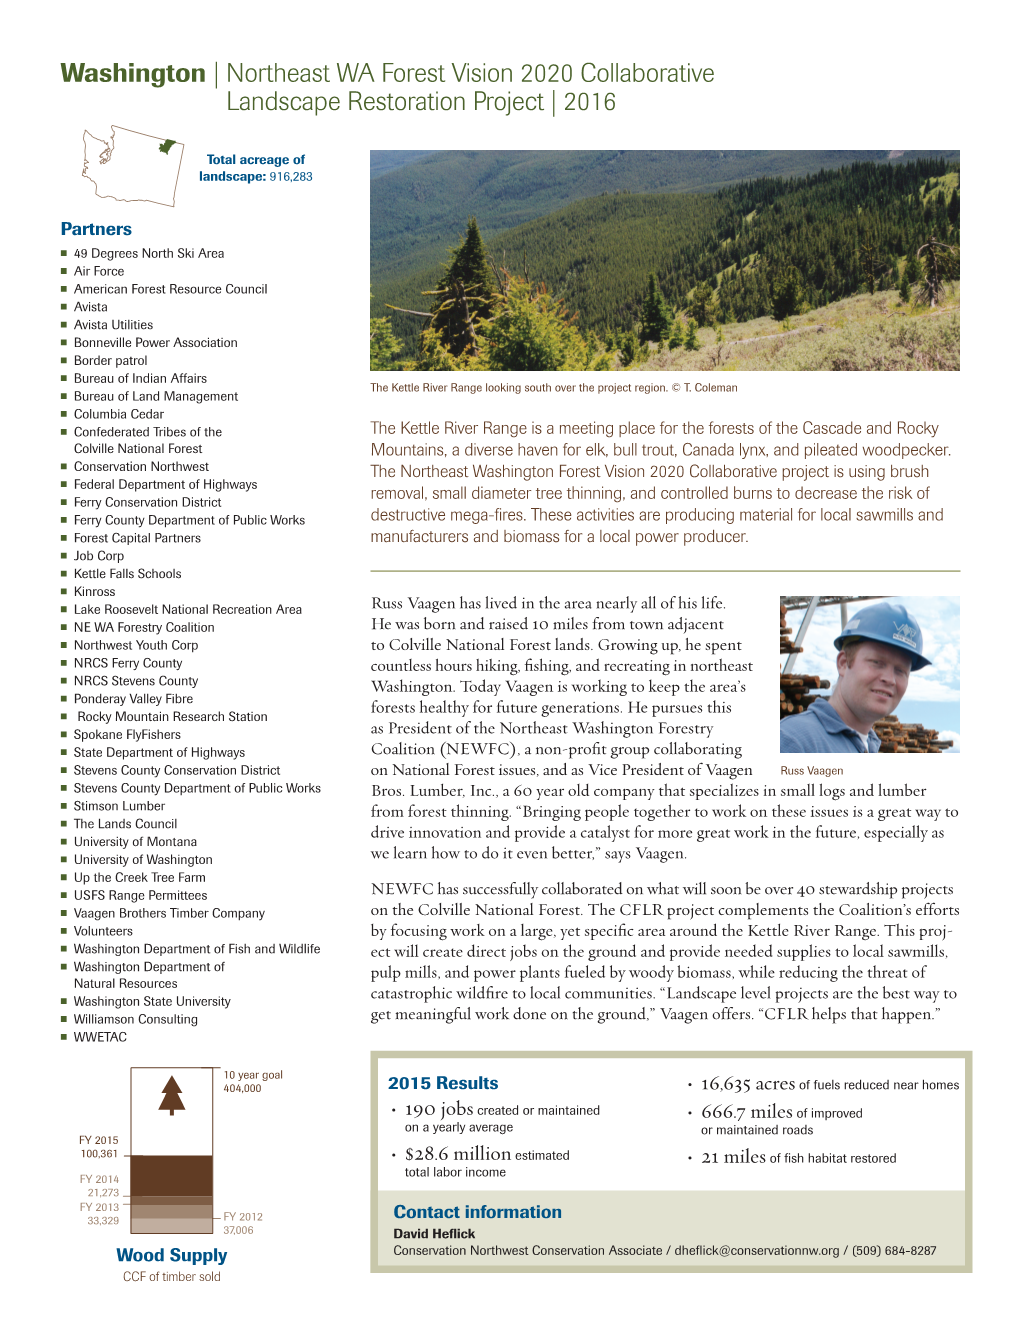 Washington | Northeast WA Forest Vision 2020 Collaborative Landscape Restoration Project | 2016